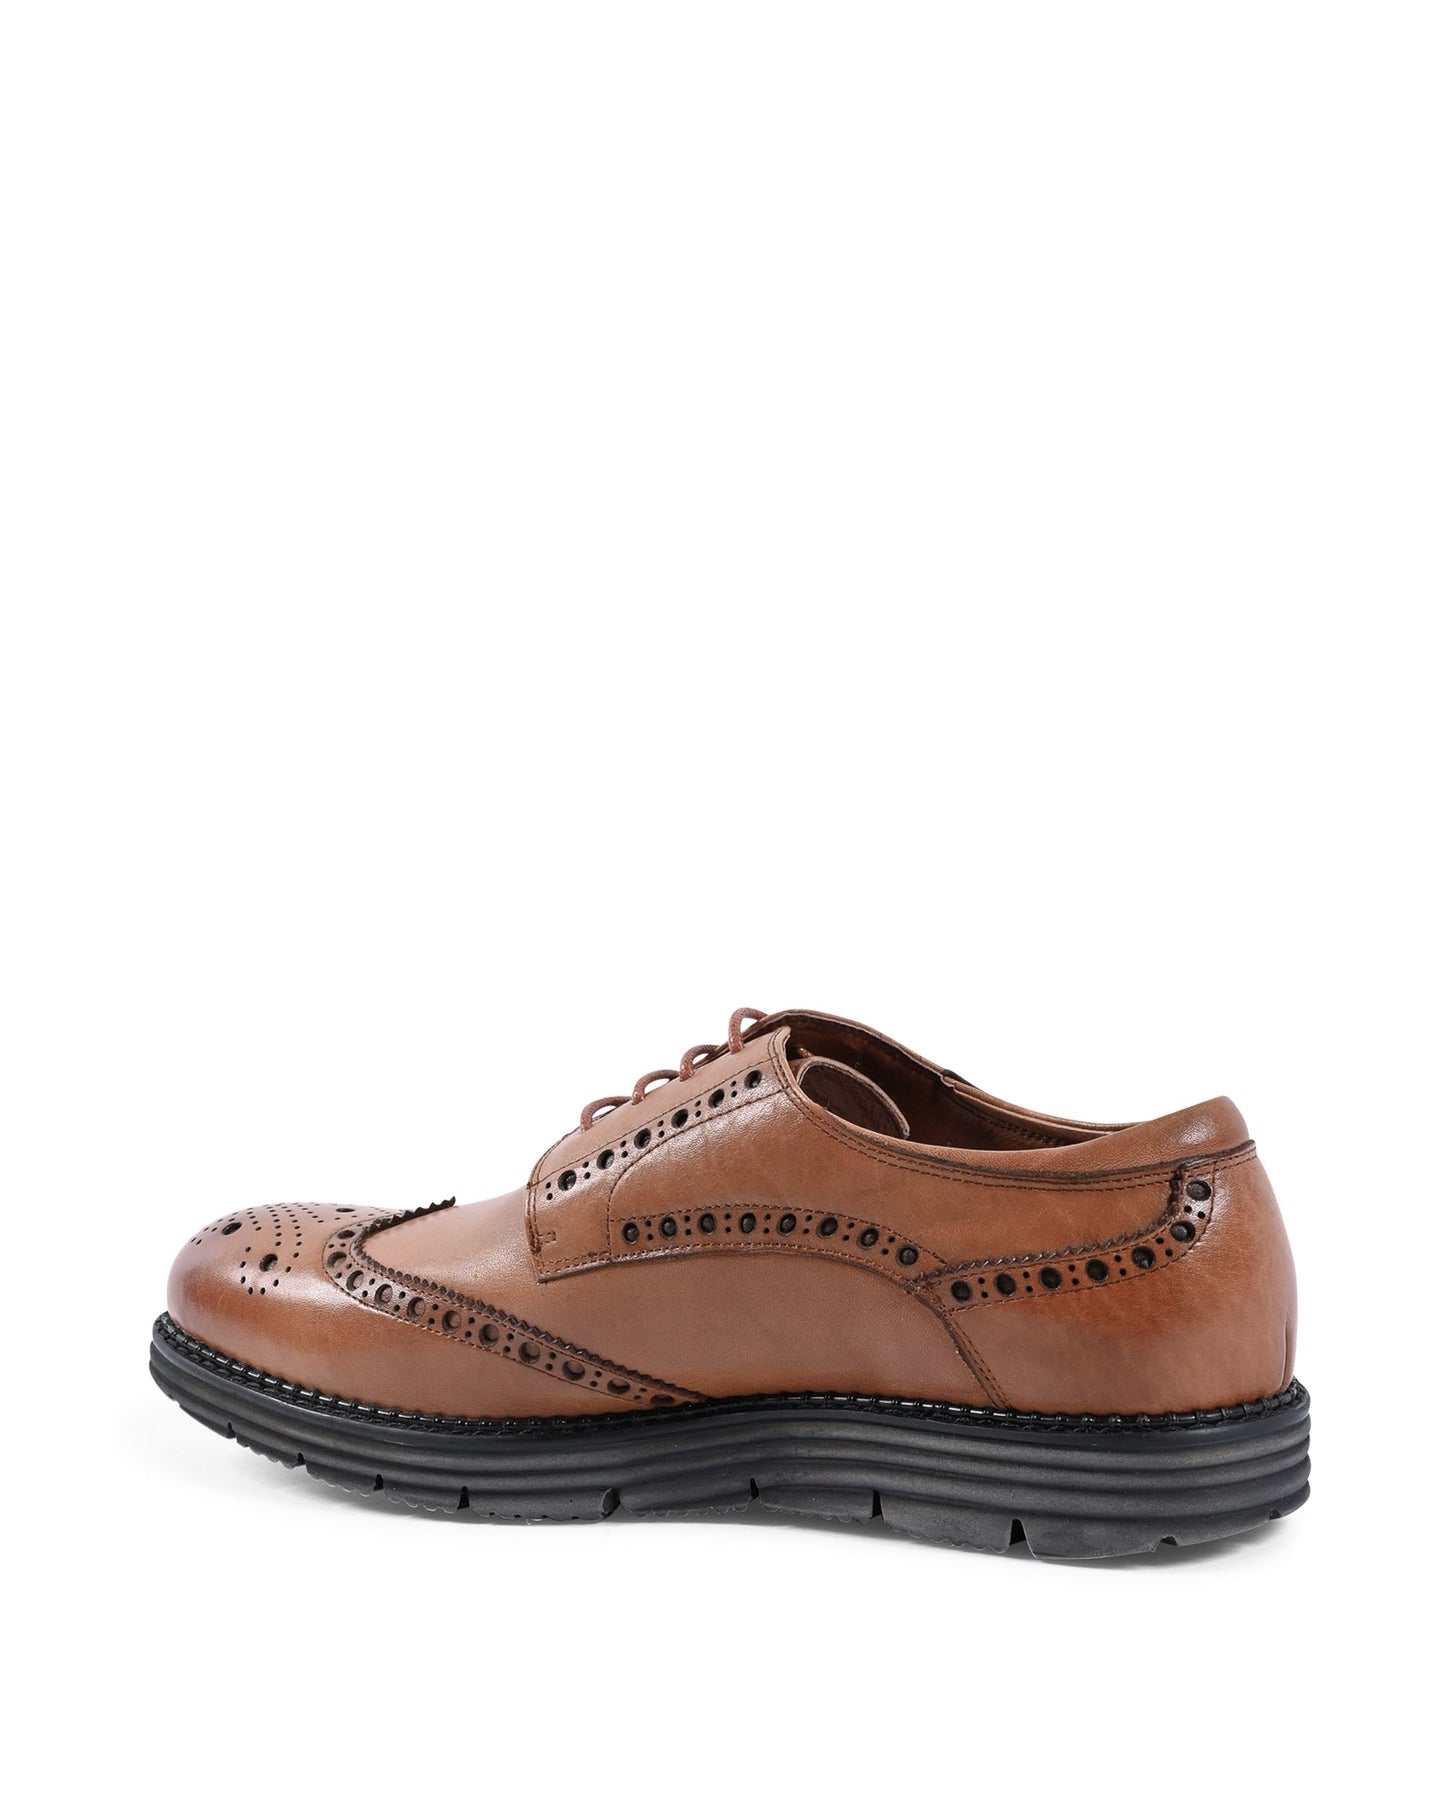 19V69 Italia Mens Lace Up Shoes Brown YO W3074-3 TABACCO